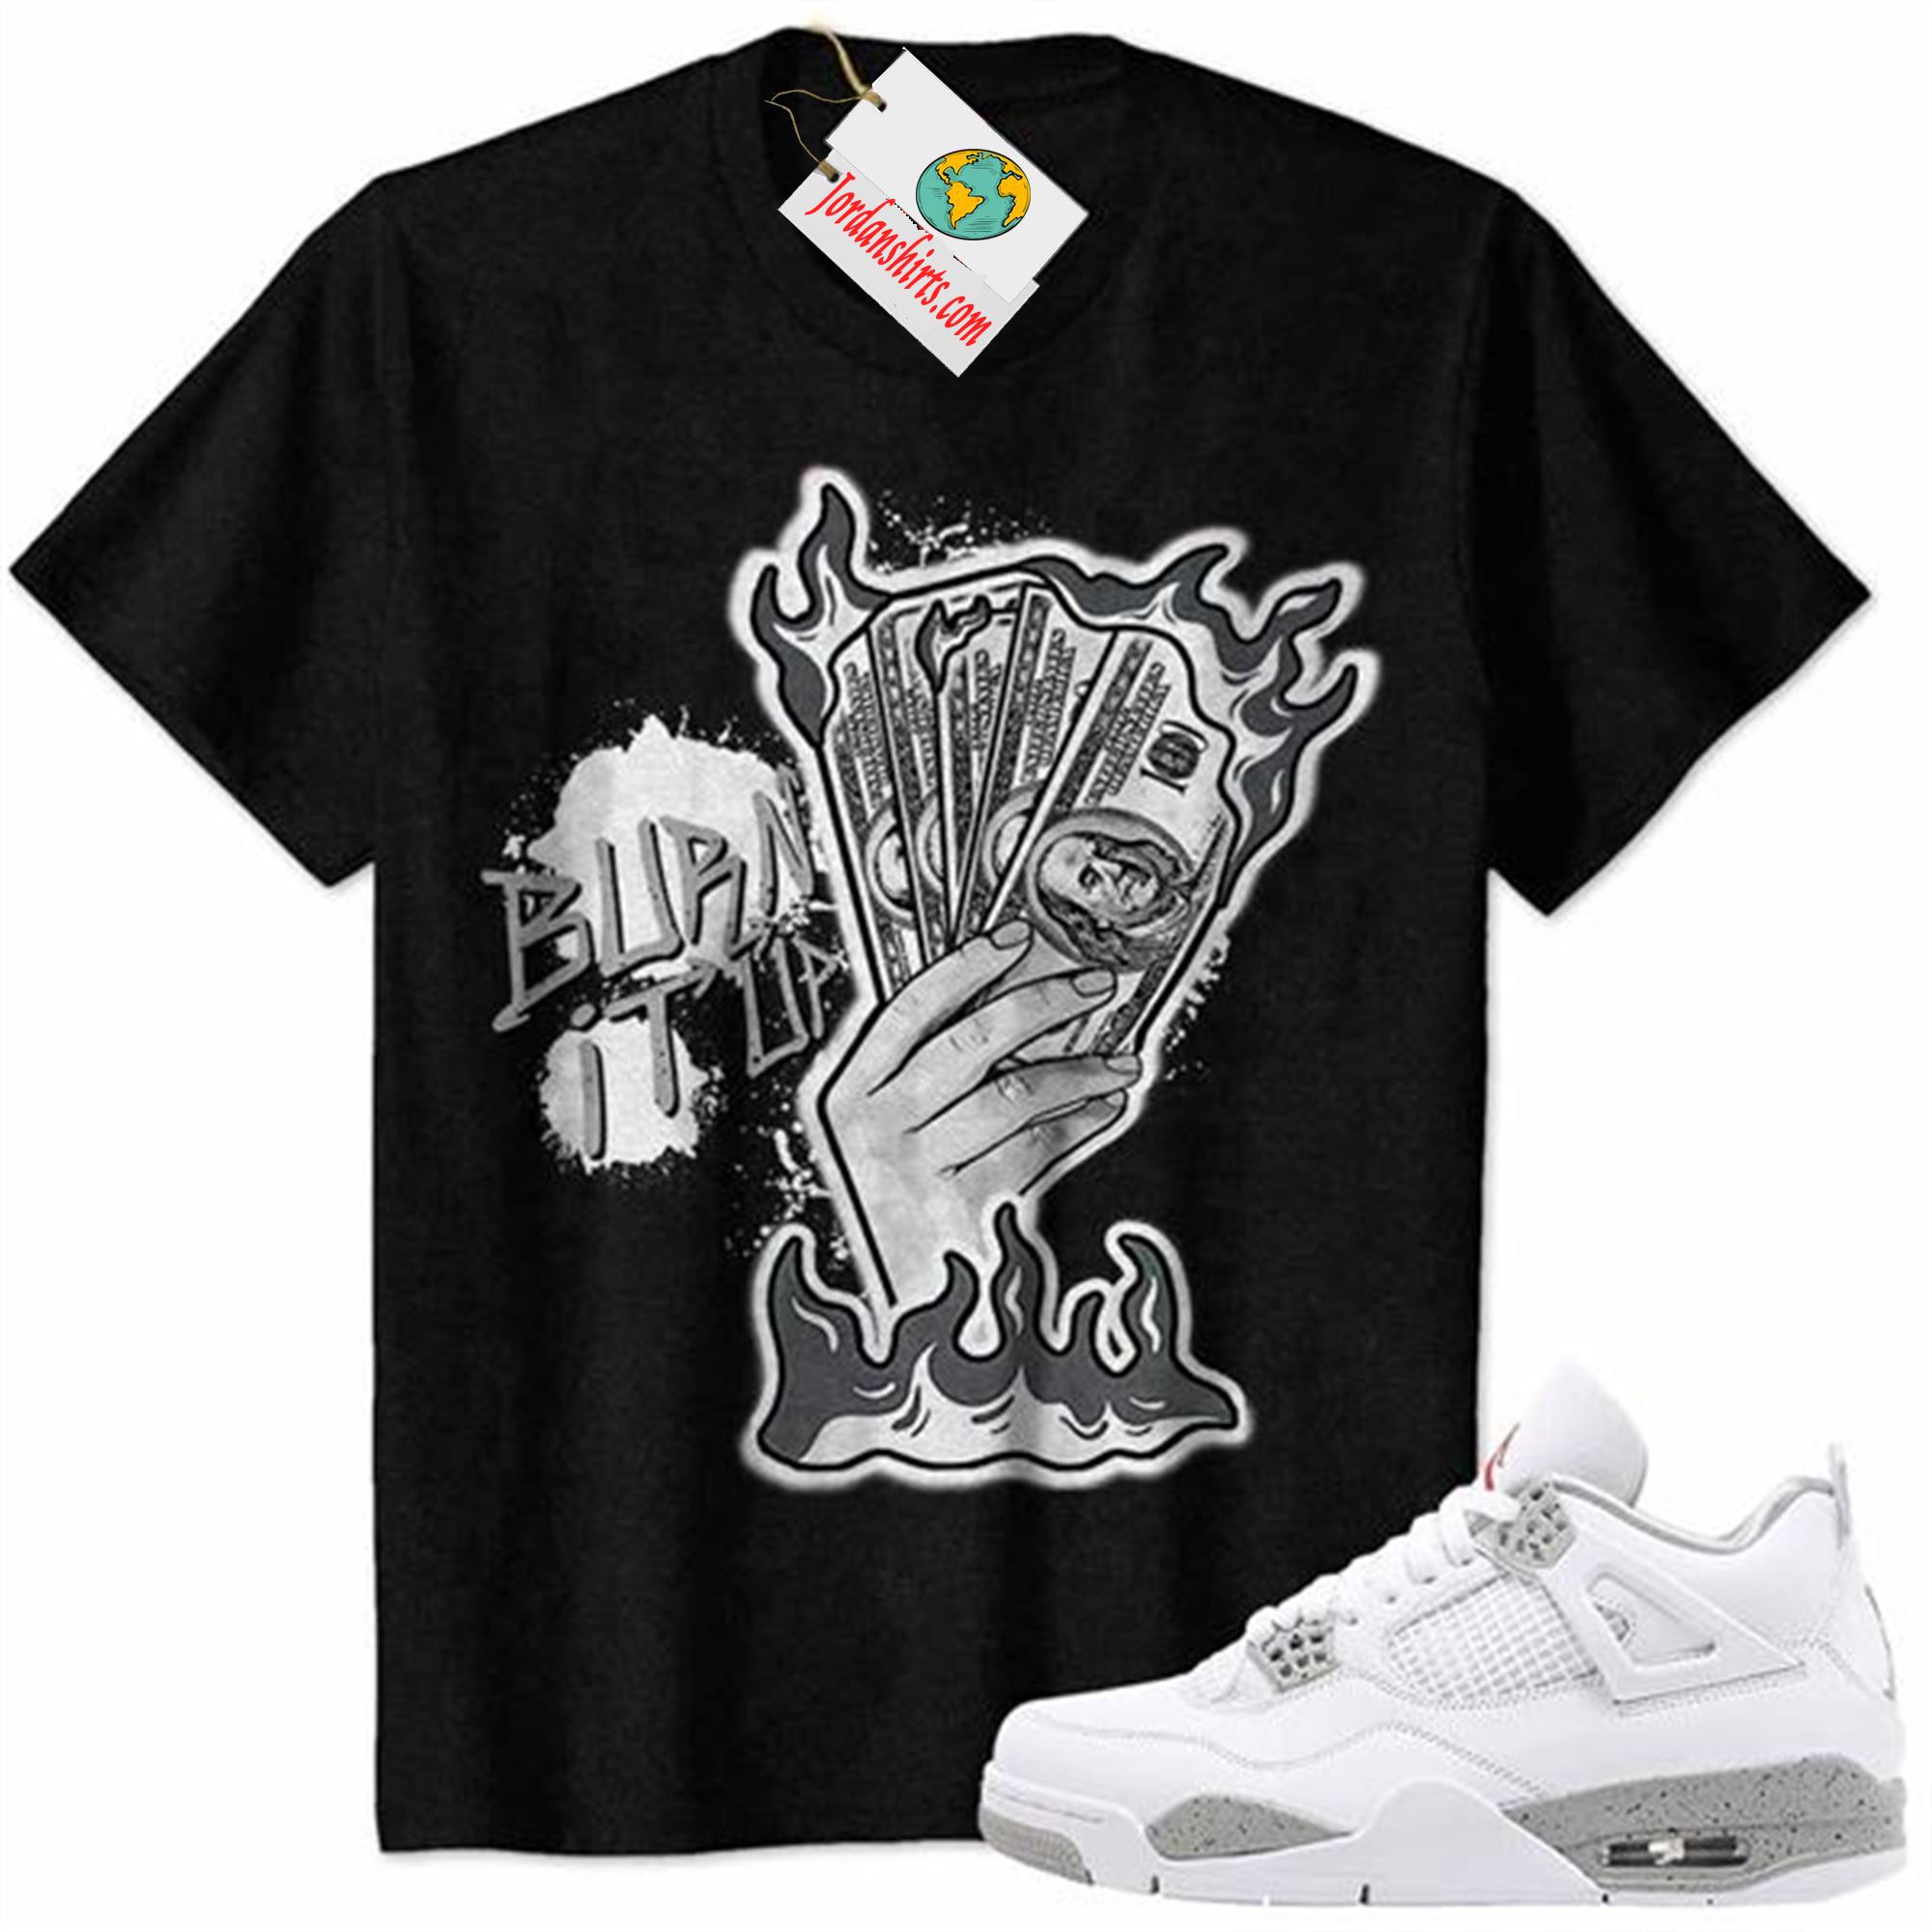 Jordan 4 Shirt, Burn It Up Black Air Jordan 4 White Oreo 4s Size Up To 5xl